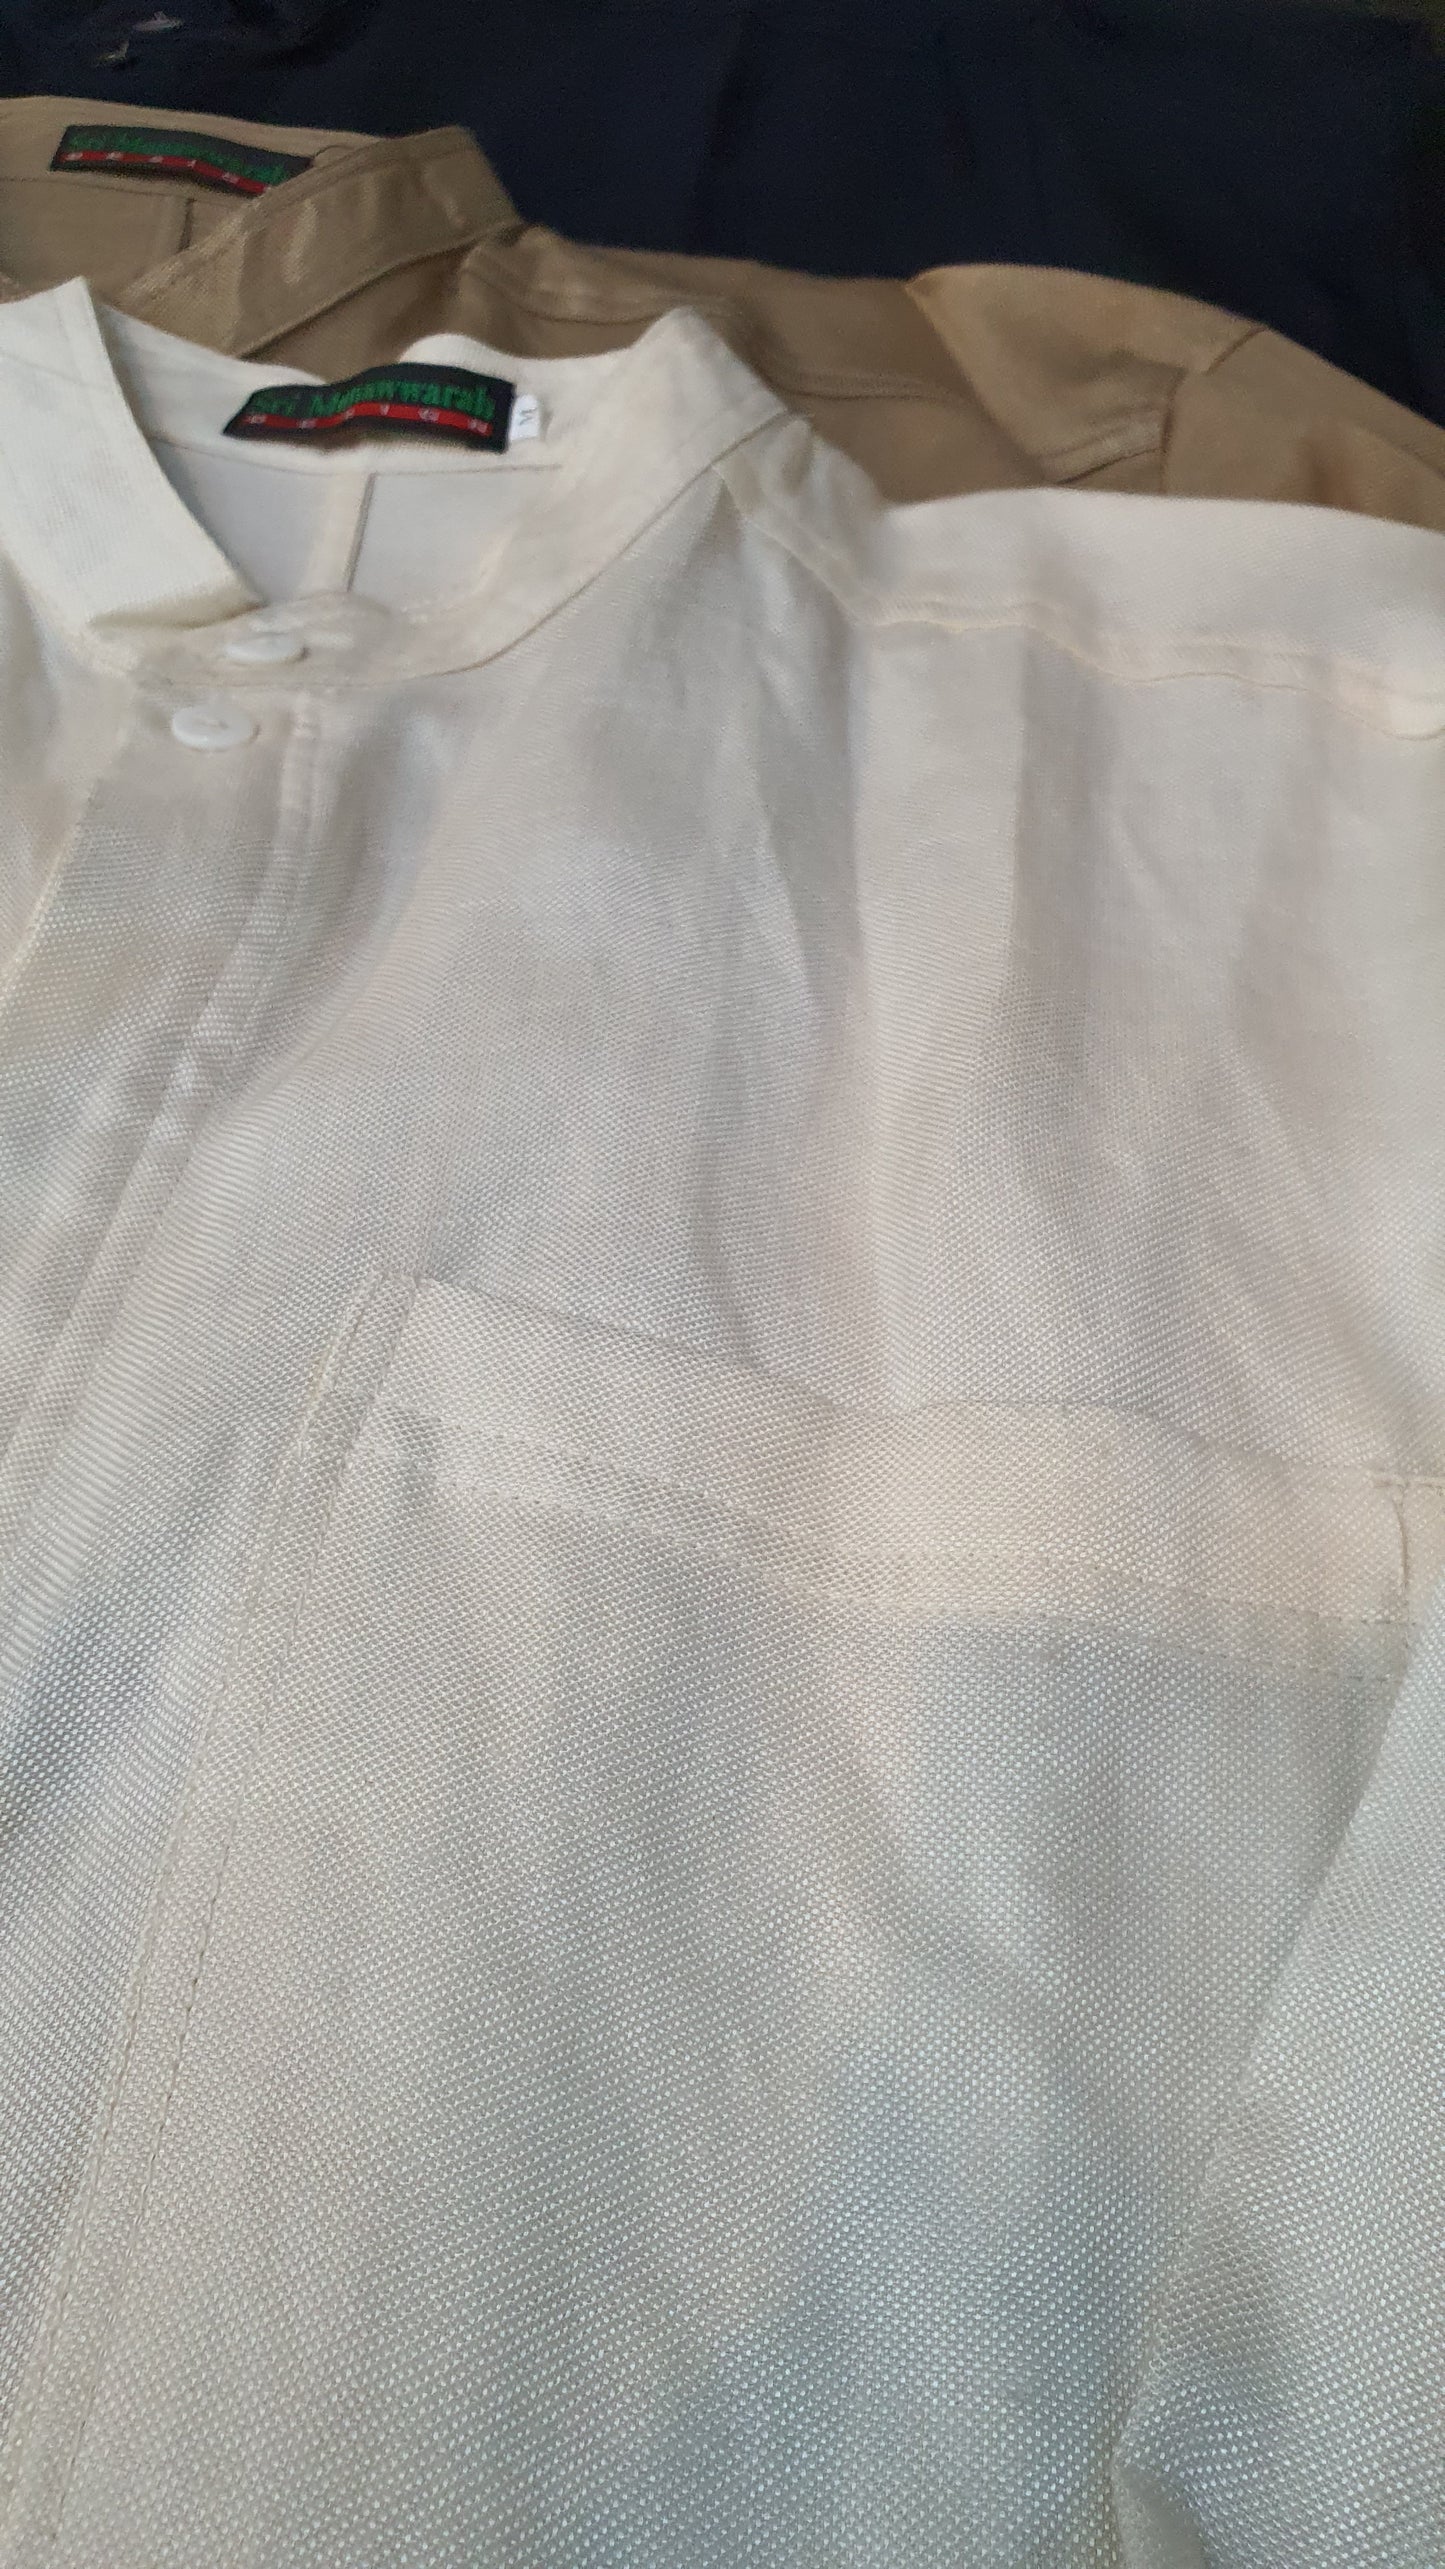 Munawwarah®Collar Men Cotton Linen Shirt